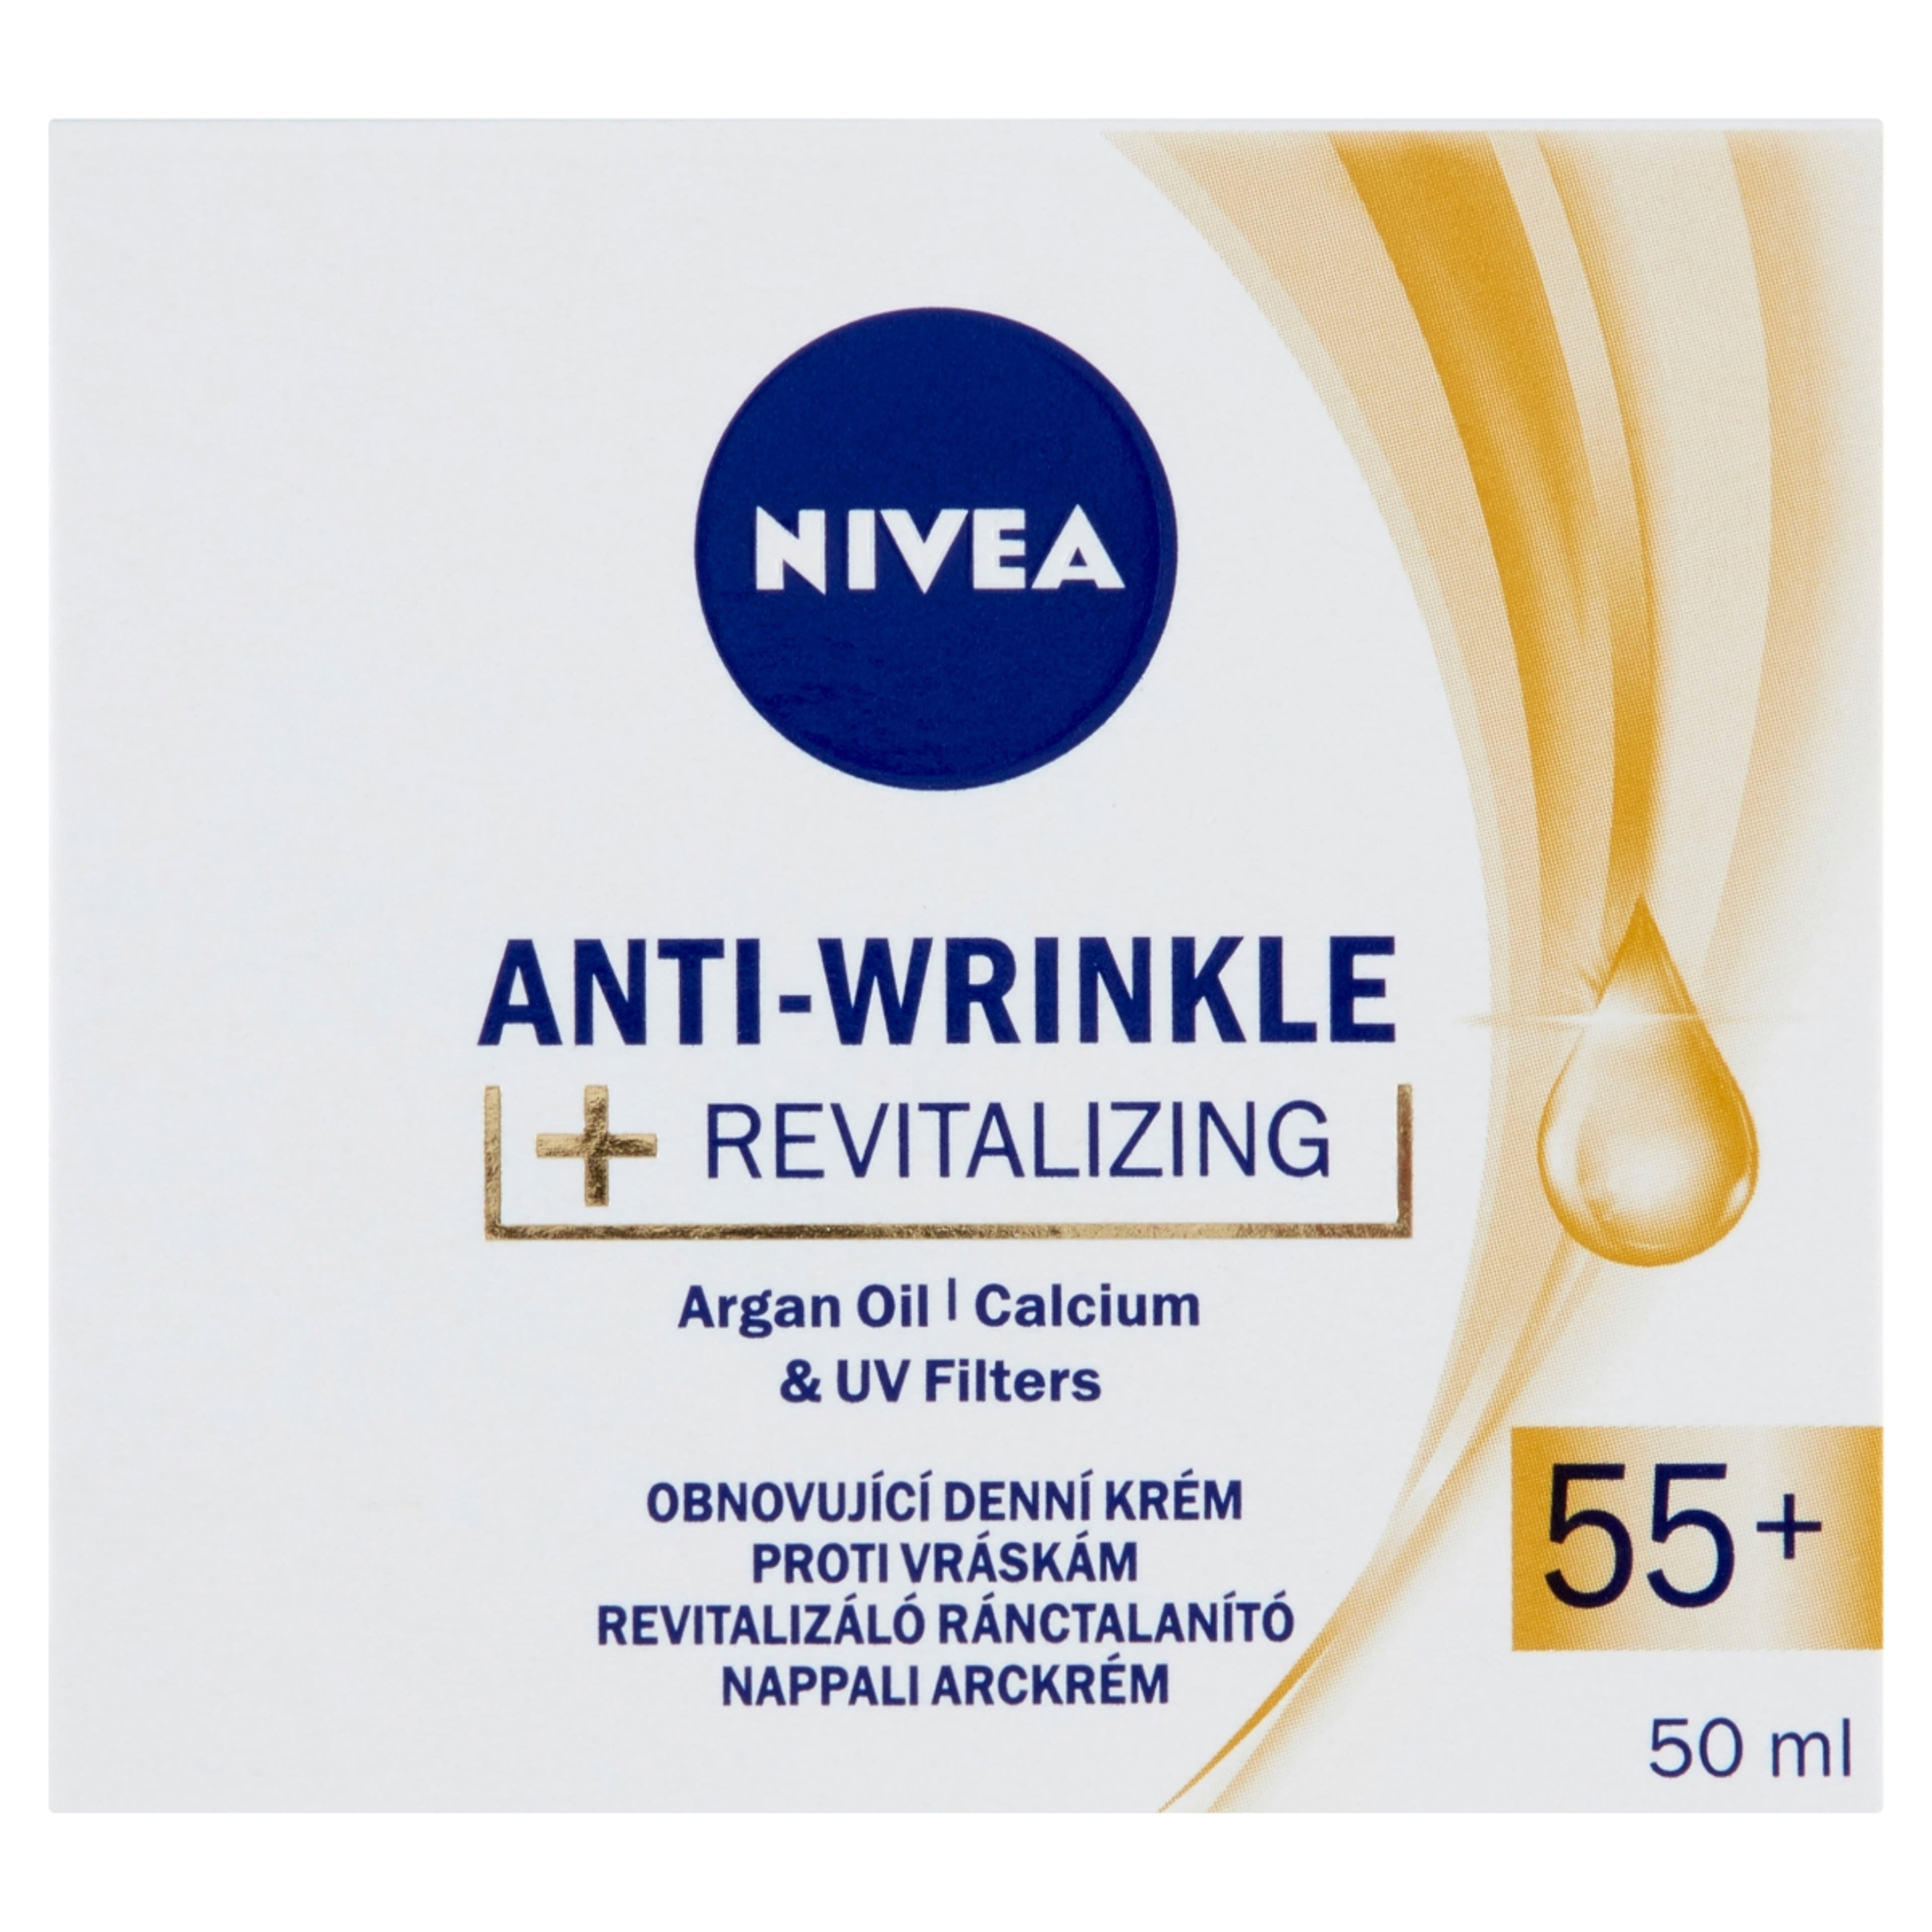 Nivea anti wrinkle 55+ nappali arckrém - 50 ml-1